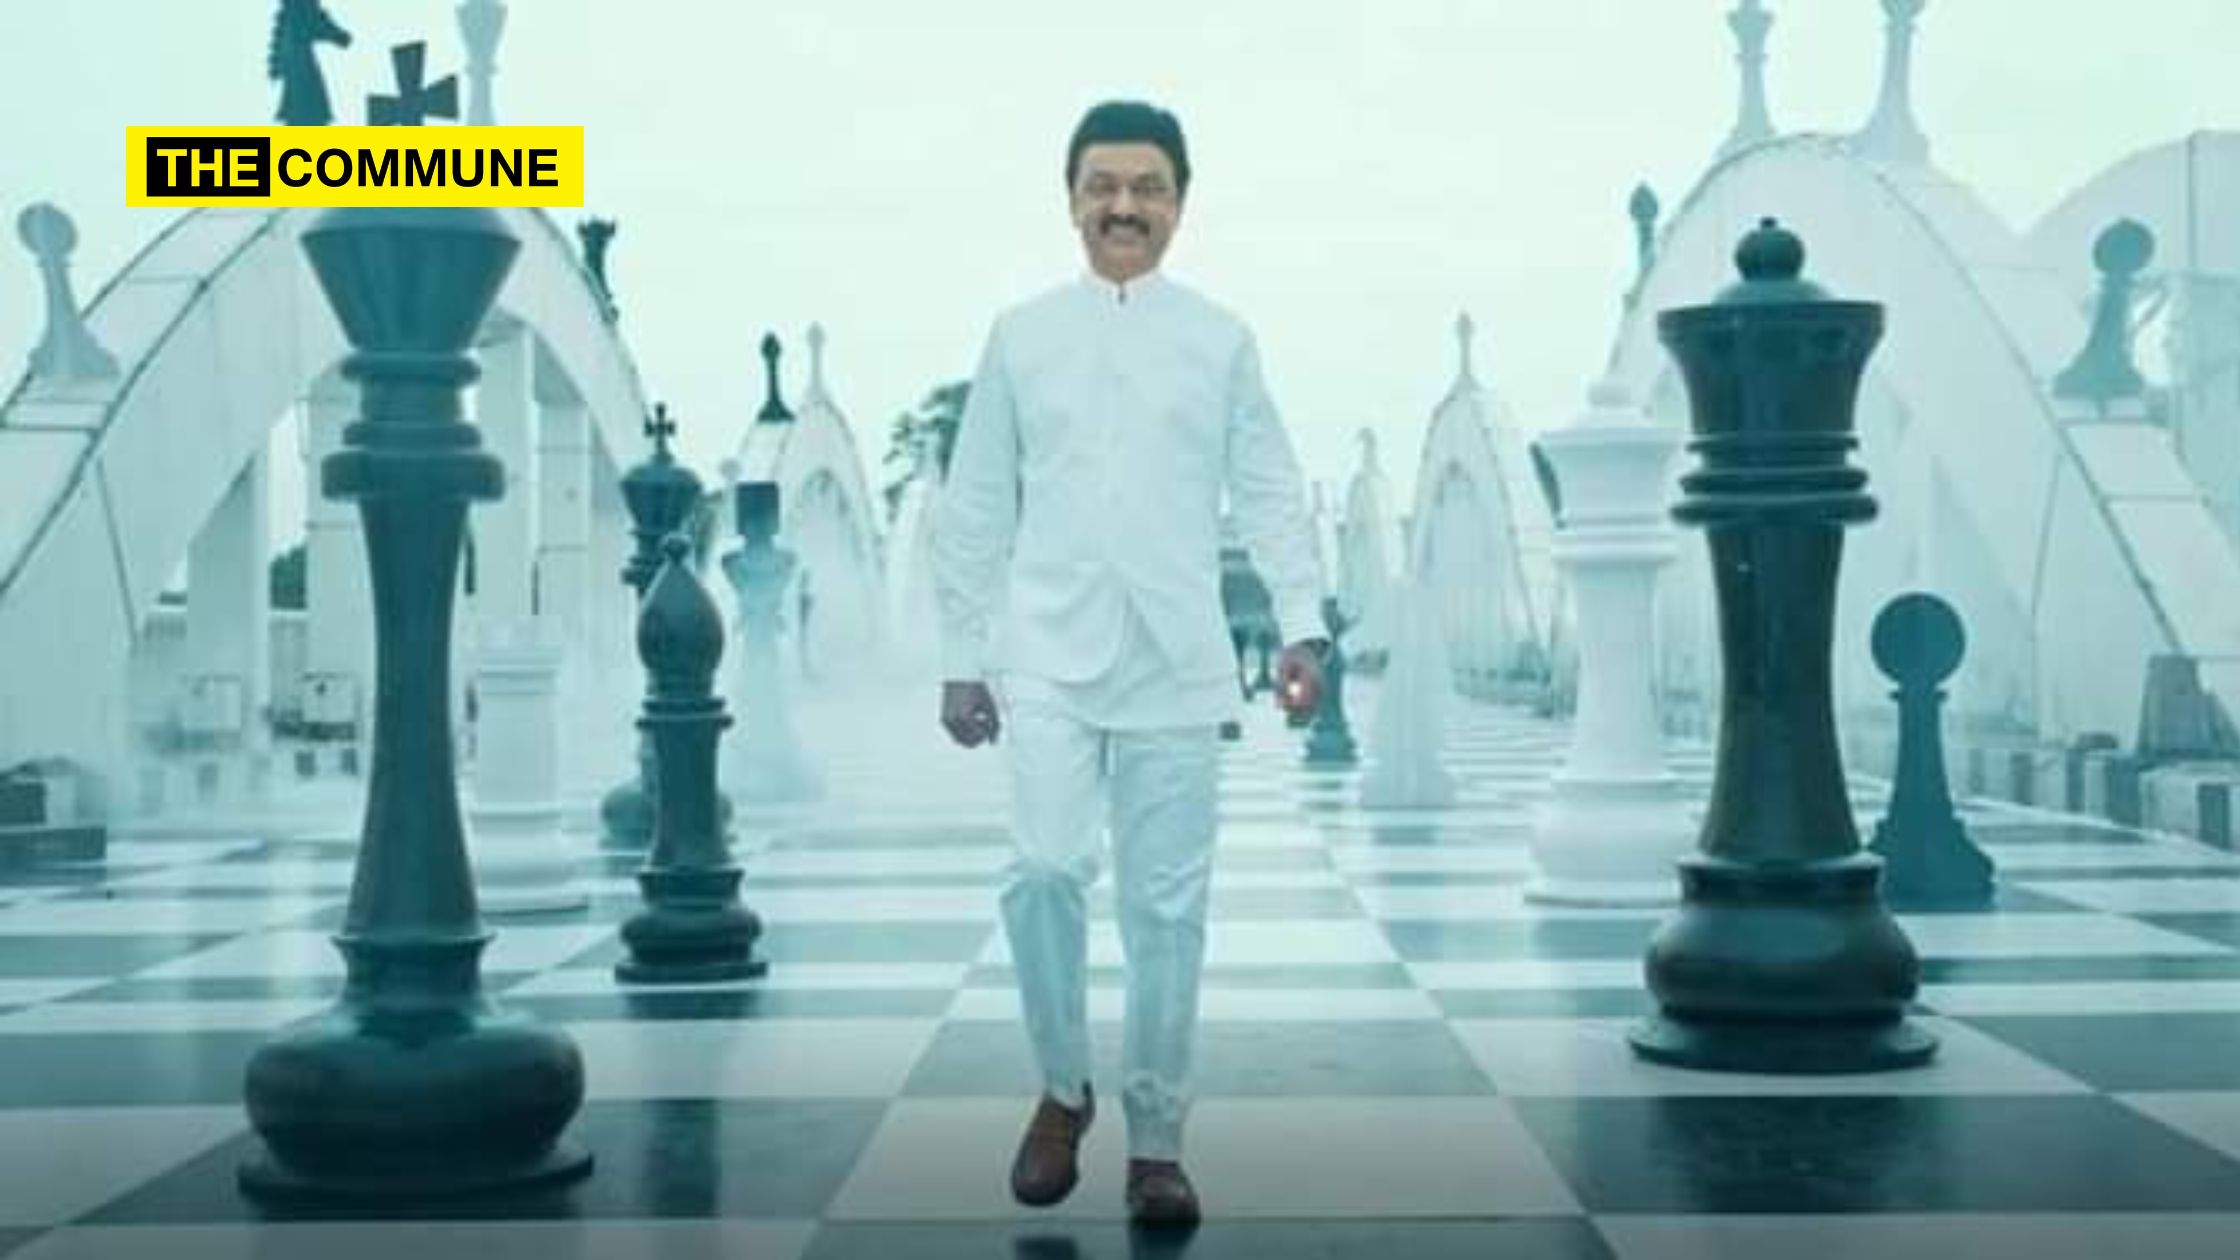 Chess Olympiad 2022 HIGHLIGHTS: Tamil Nadu CM Stalin Felicitates